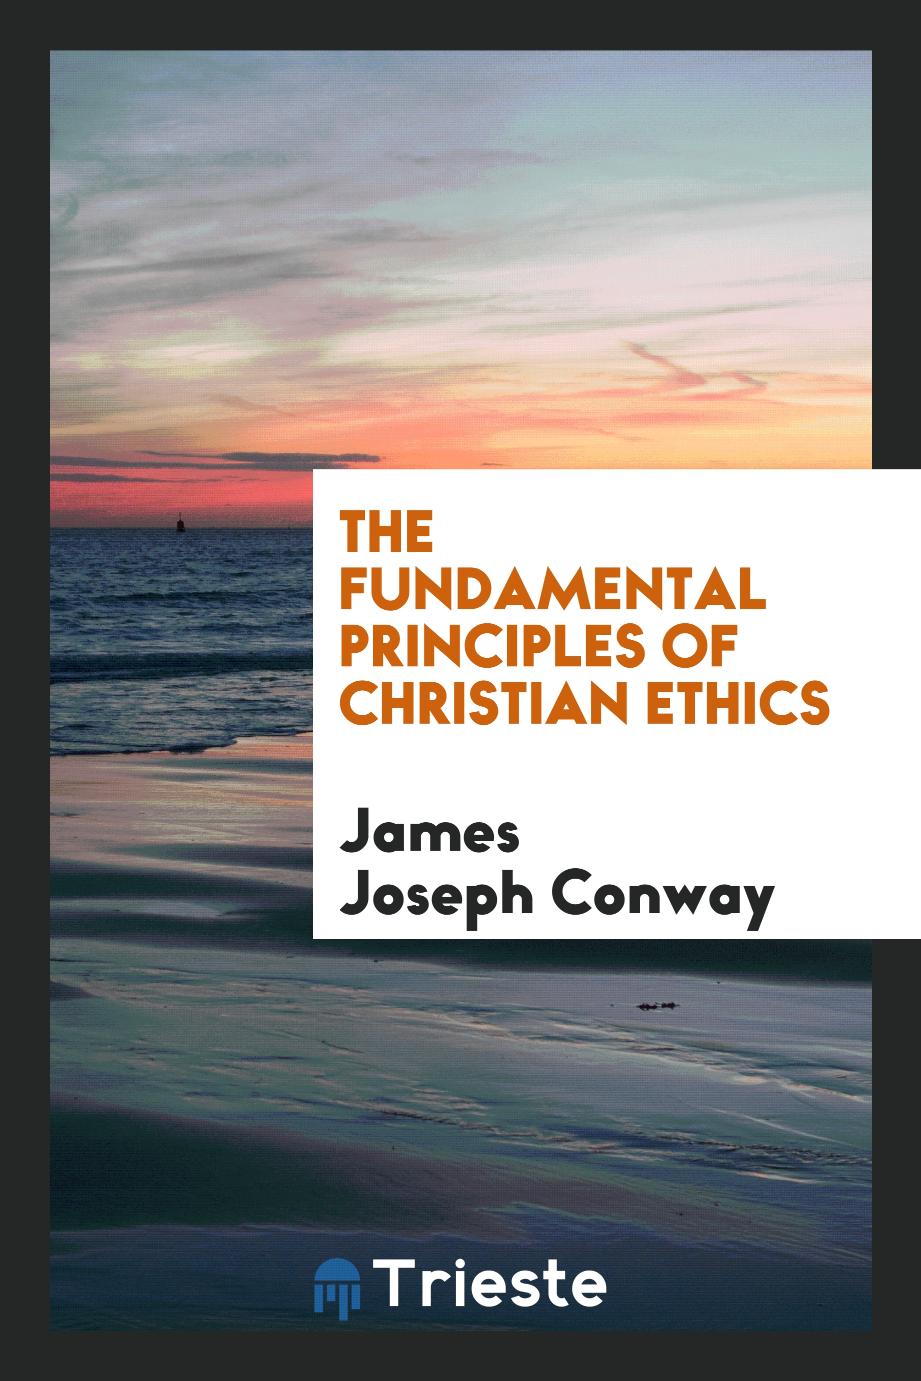 The fundamental principles of Christian ethics